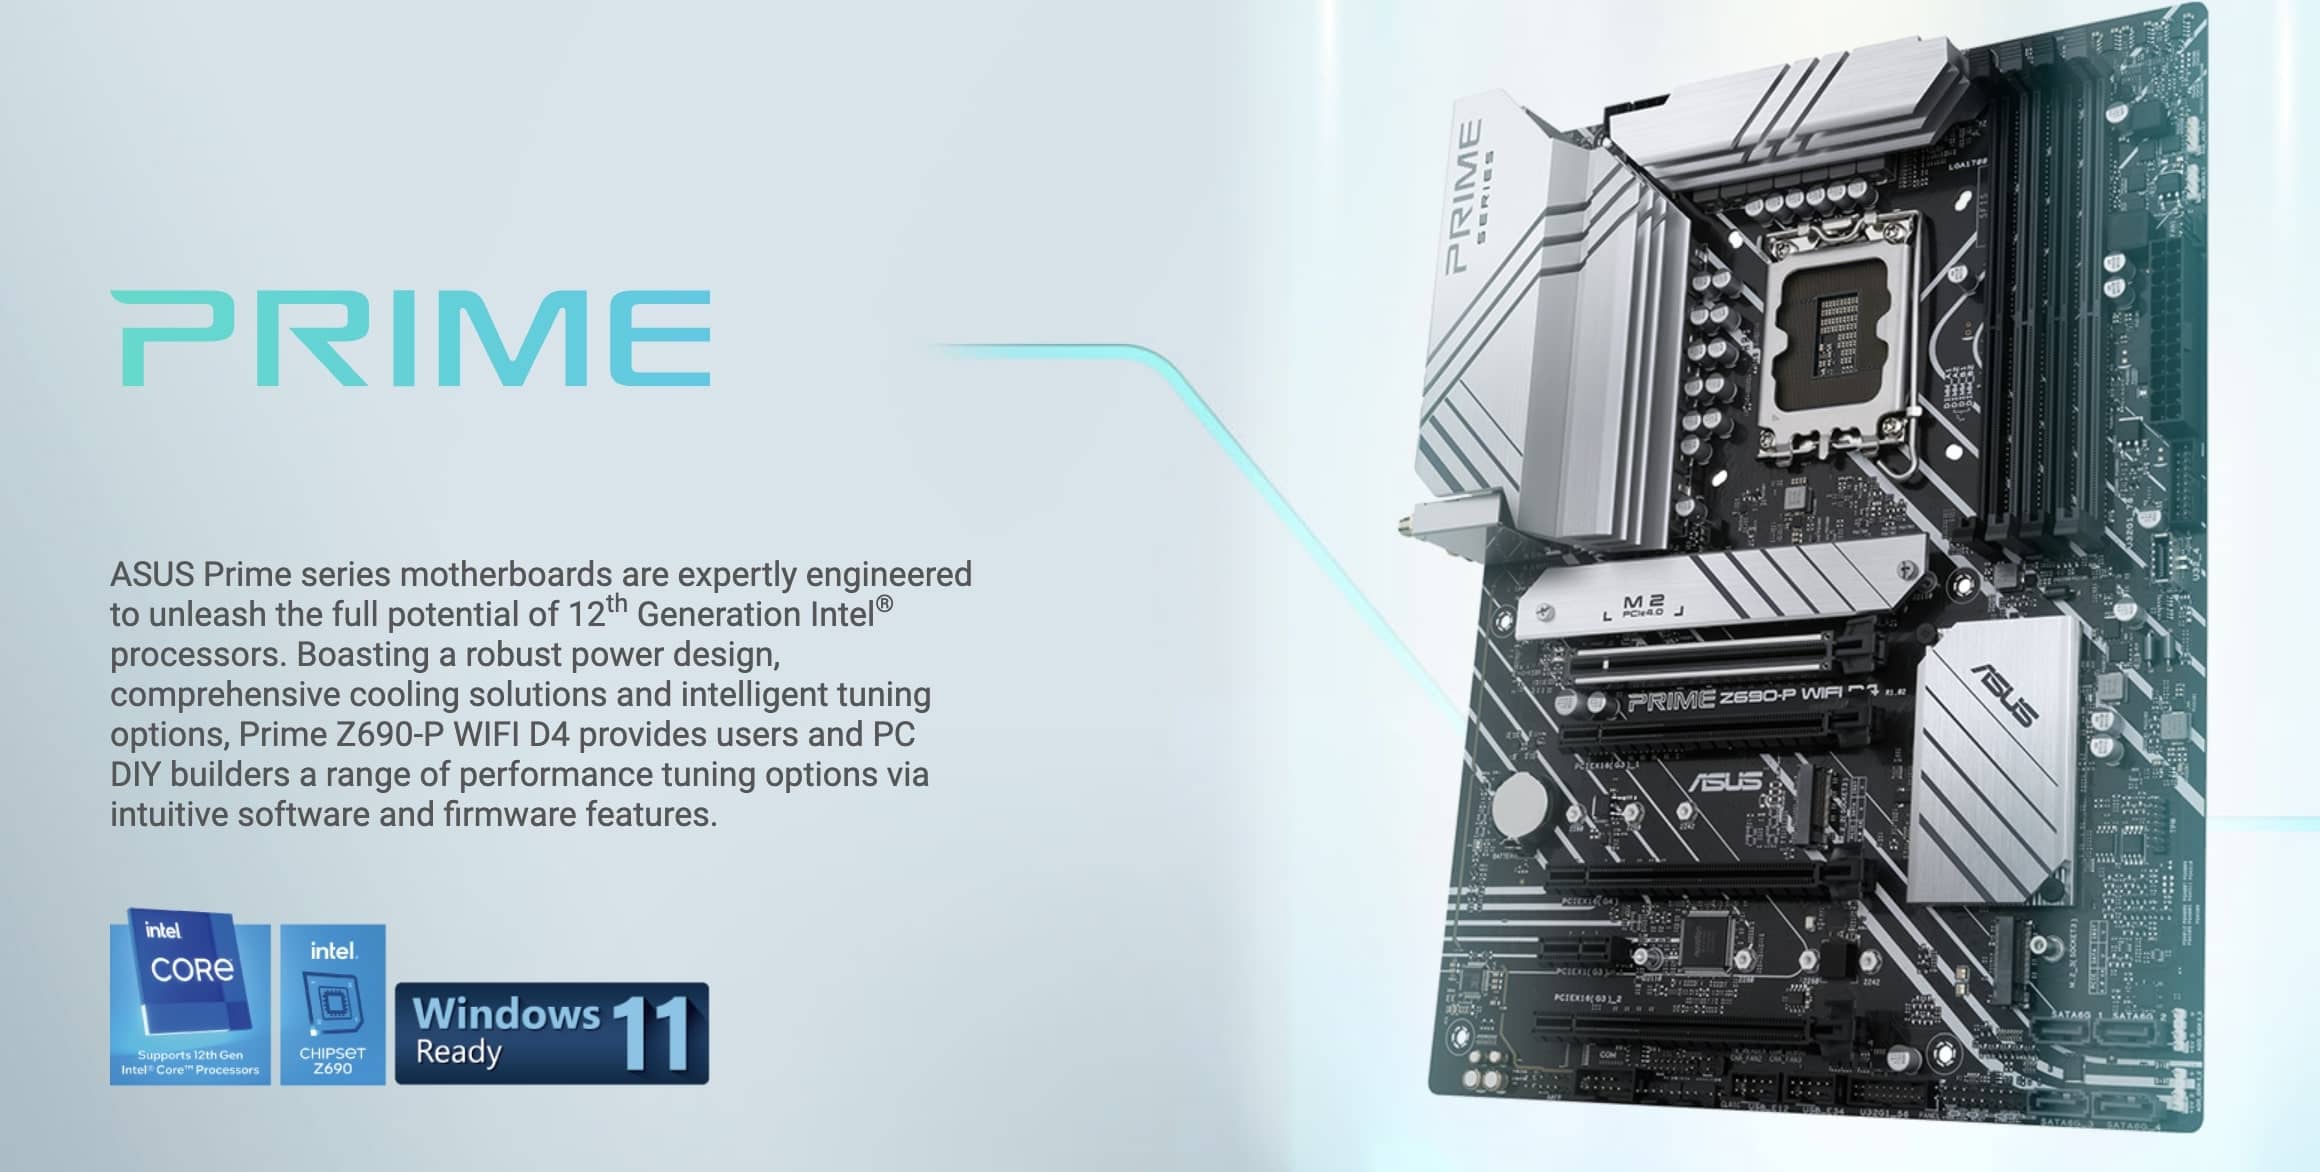 Asus Prime Z690-P Wi-Fi D4